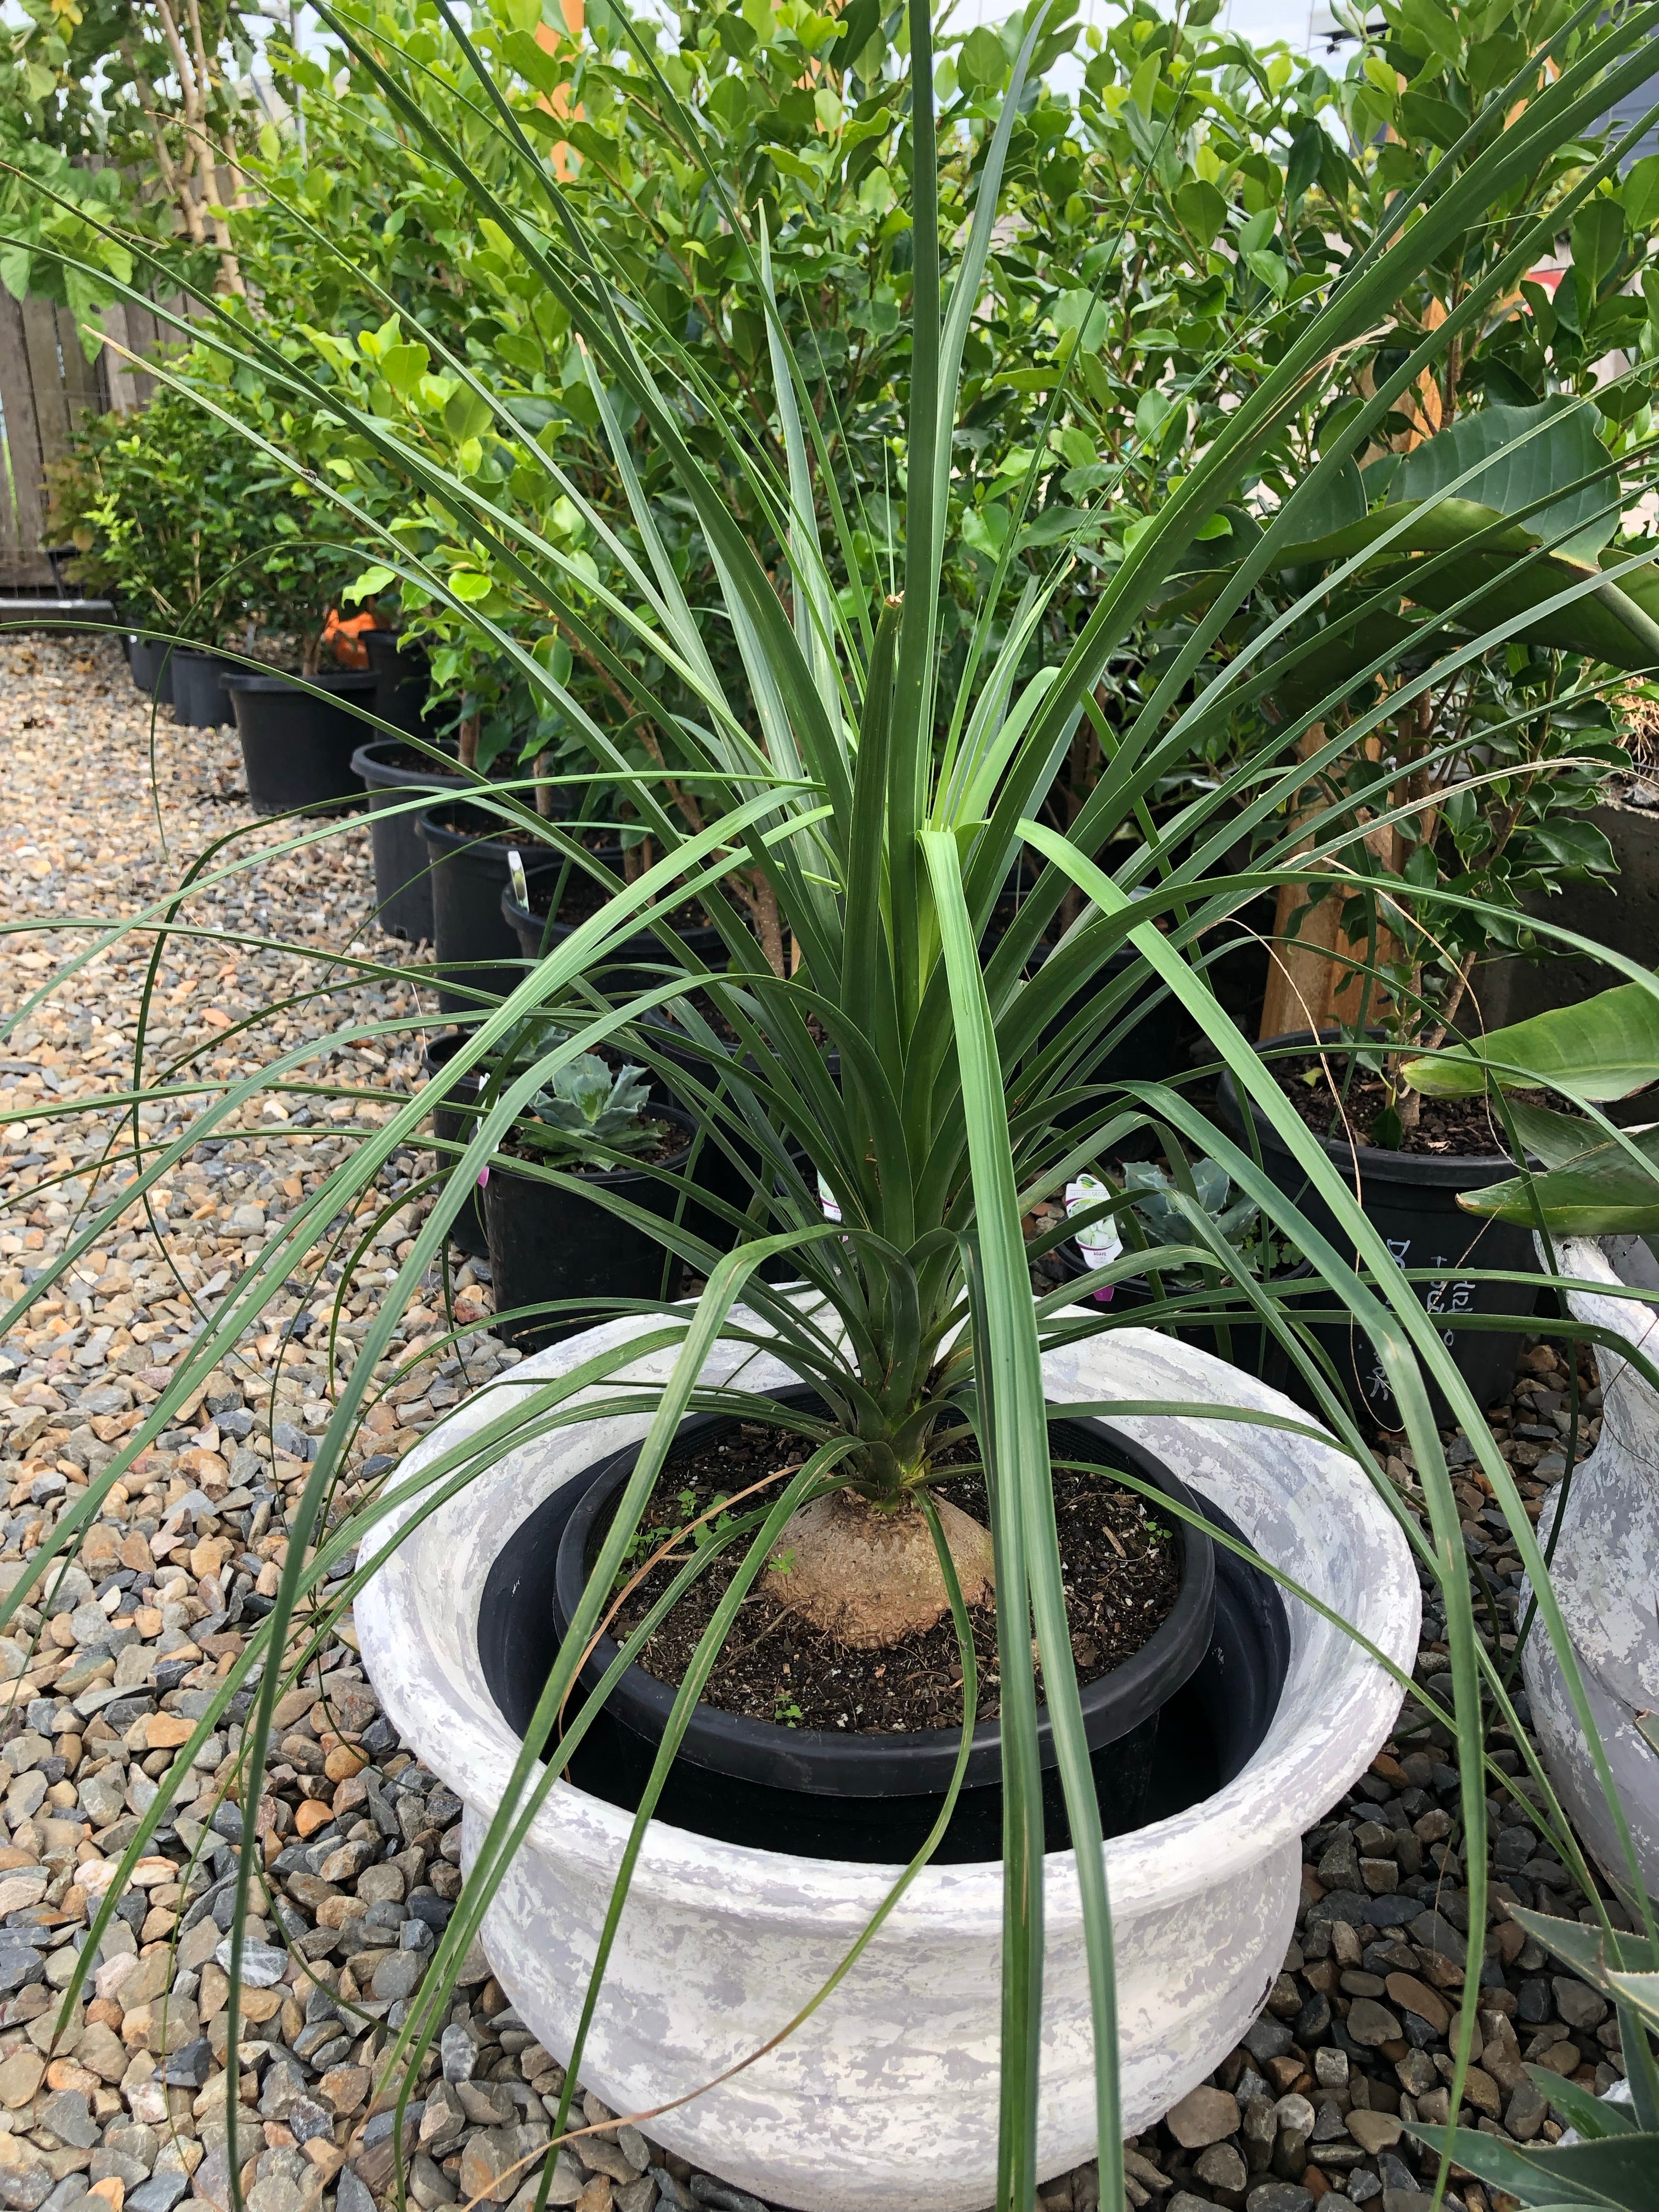 Beaucarnea recurvata - Ponytail Palm